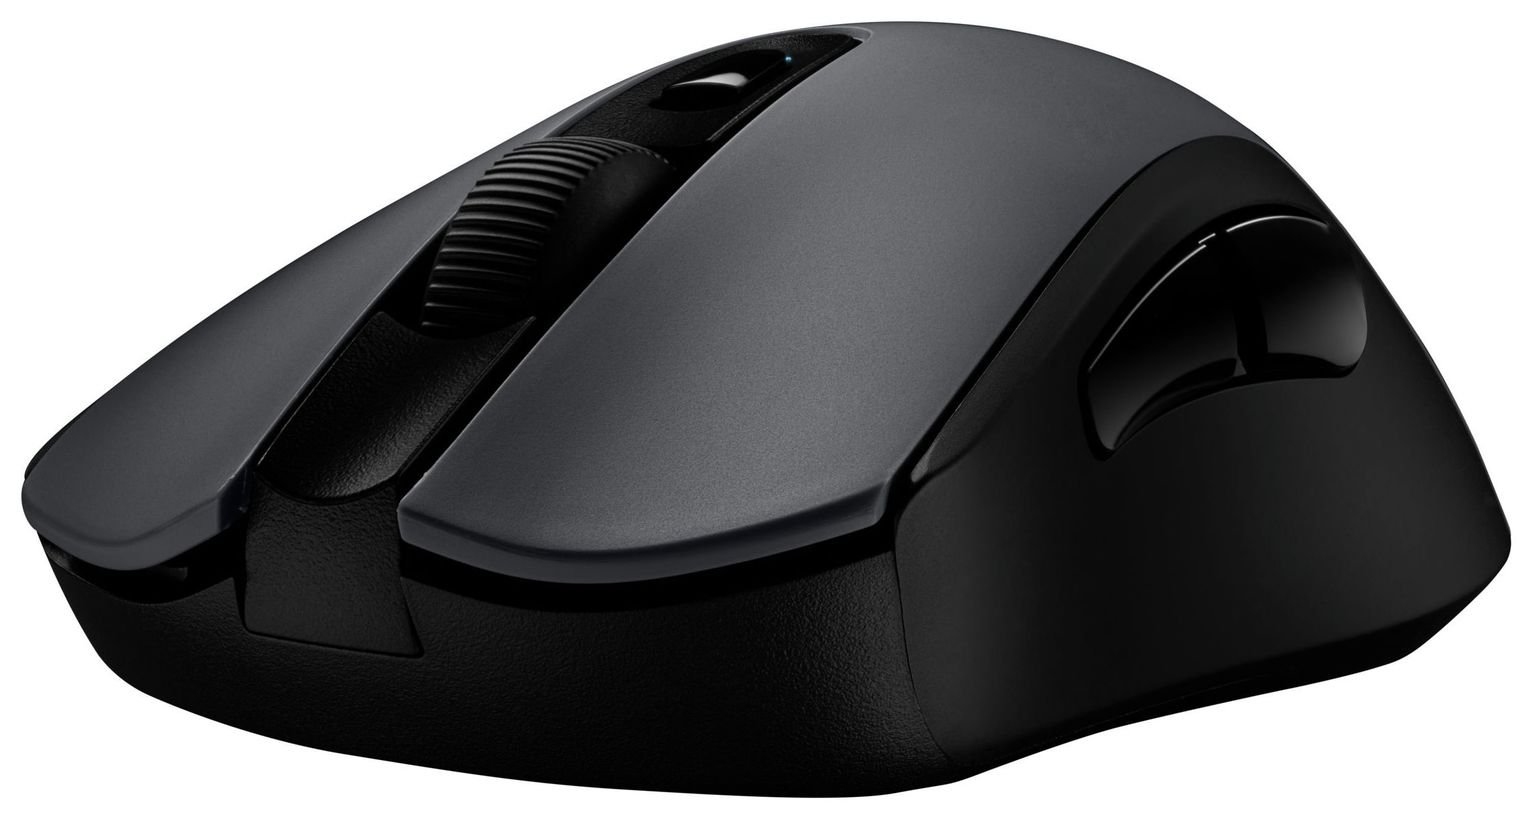 Logitech G603 Lightspeed Wireless Gaming Mouse Review